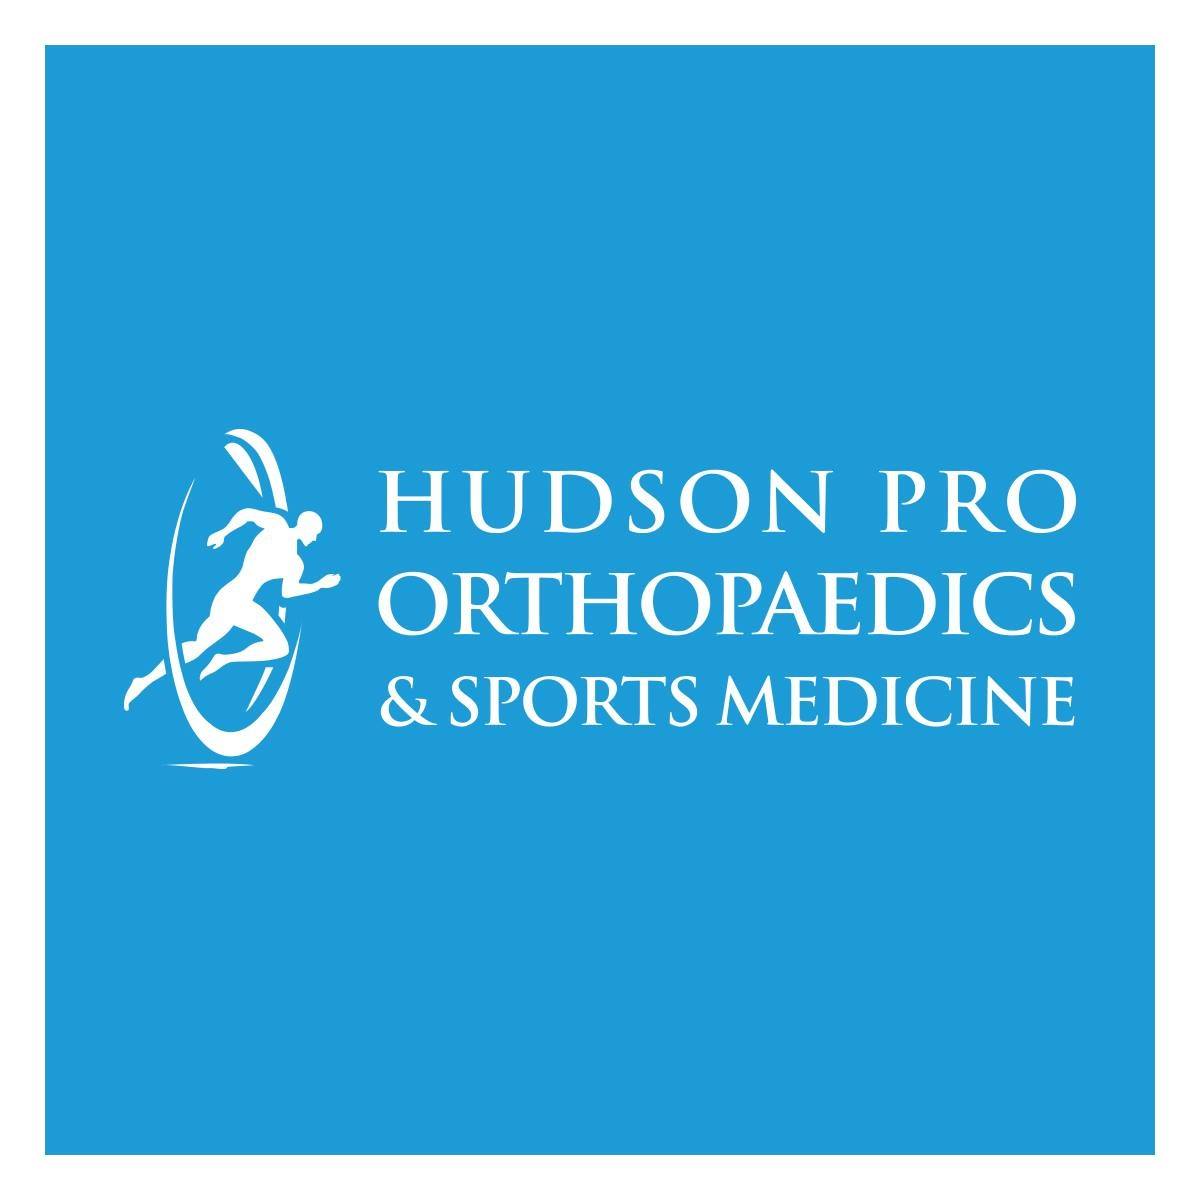 Hudson Pro Orthopaedics & Sports Medicine in Union